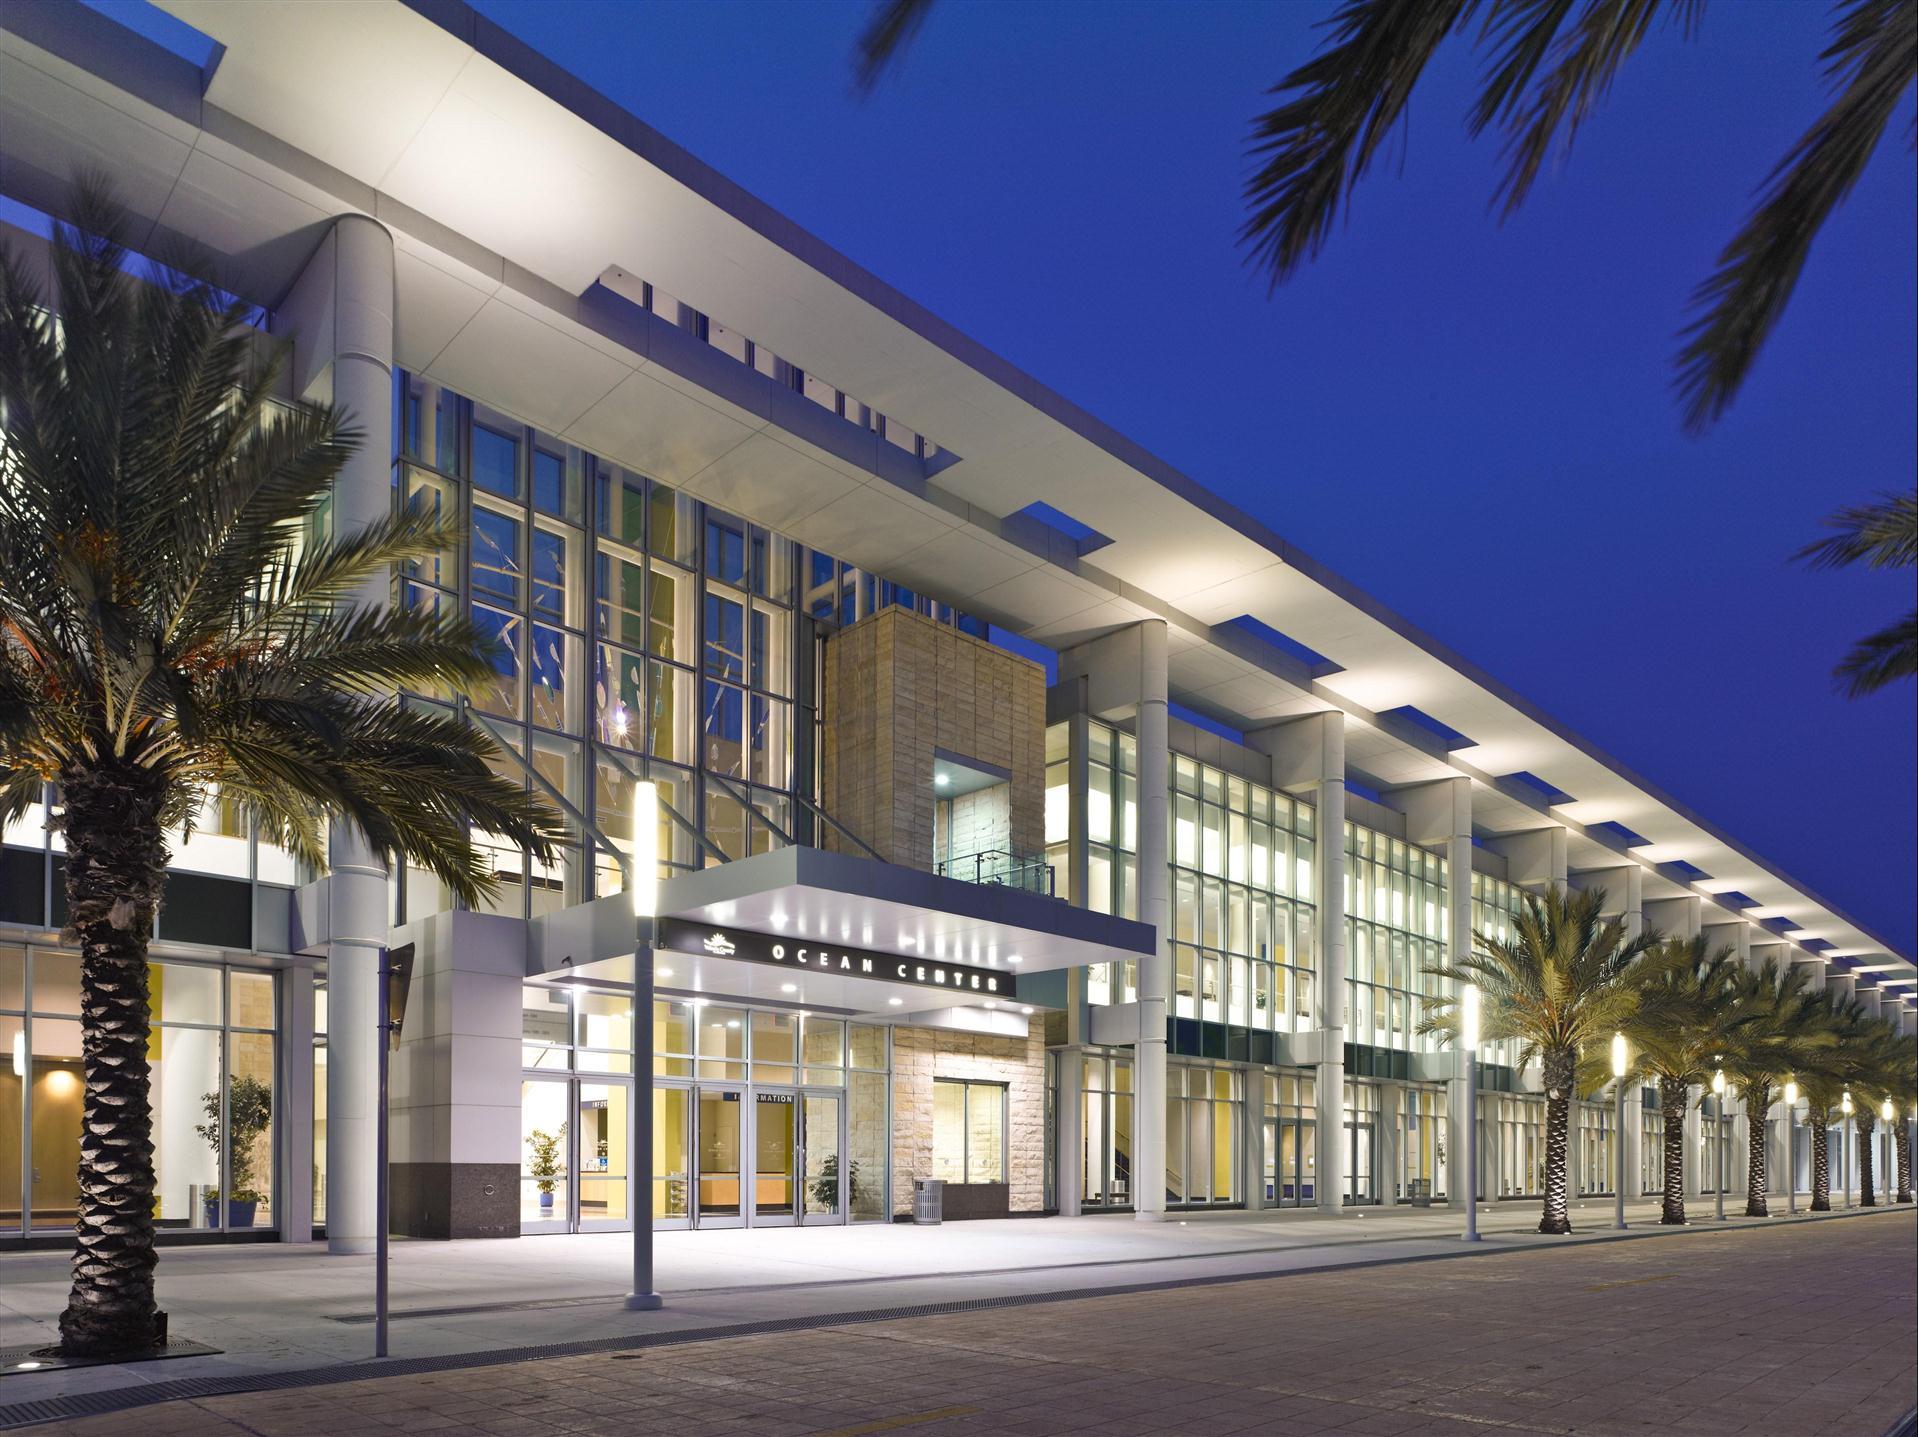 Ocean Center in Daytona Beach, FL